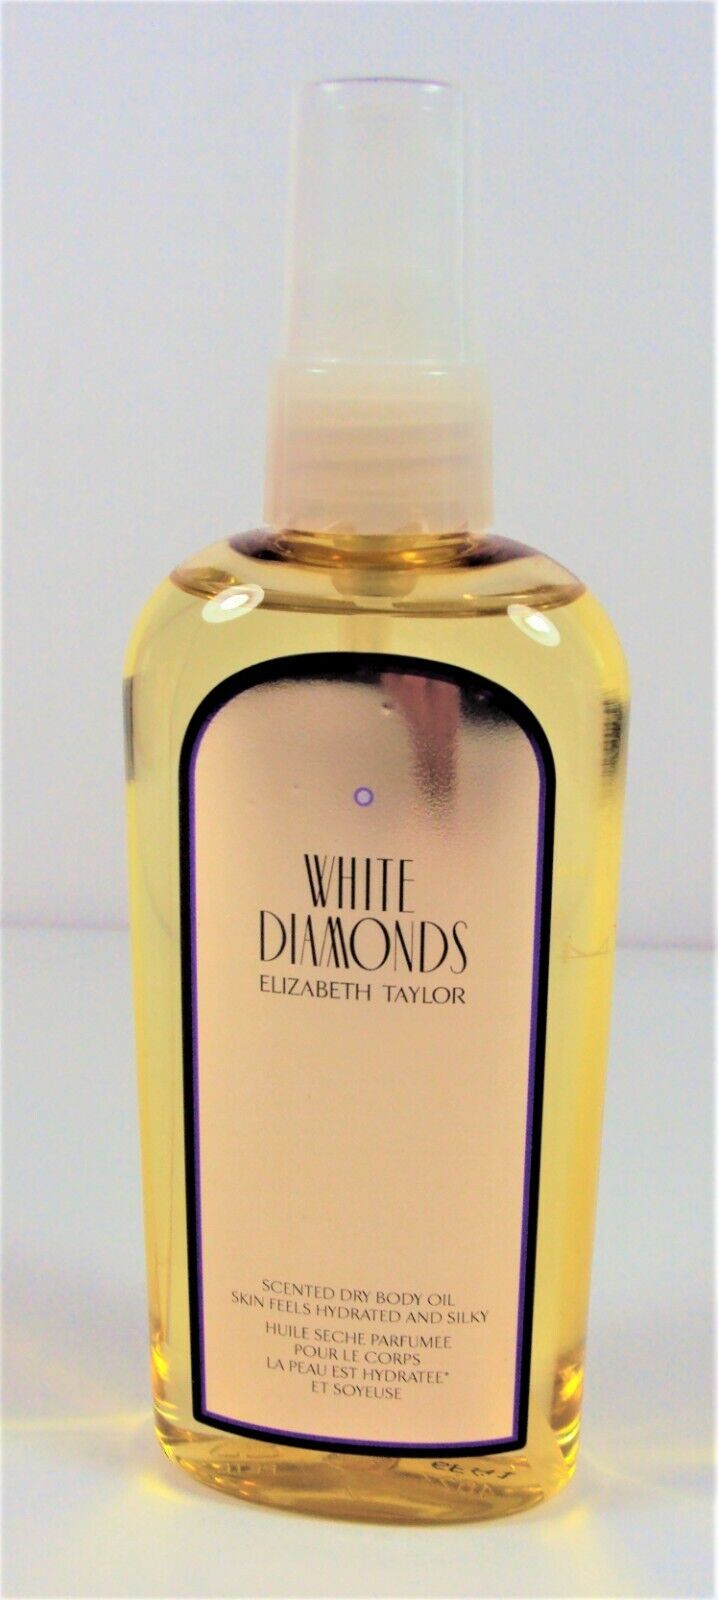 Elizabeth Taylor White Diamonds Scented Dry Body Oil Spray 4.2 oz NEW